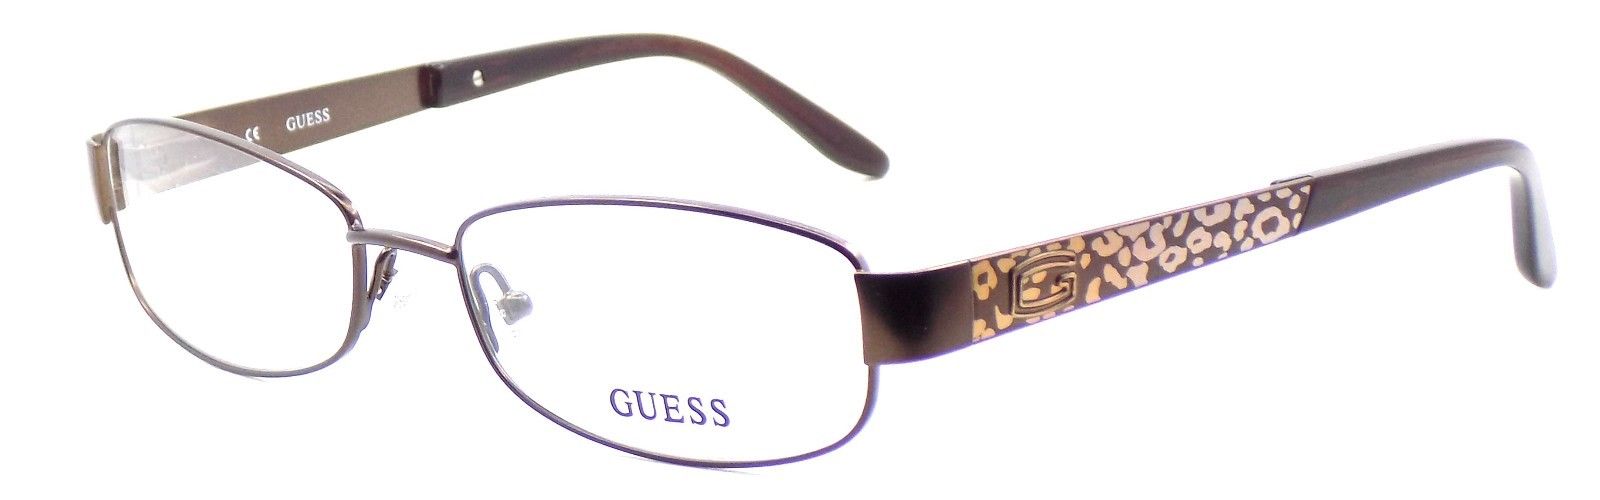 1-GUESS GU2392 BRN Women's Eyeglasses Frames 53-17-135 Brown + CASE-715583785281-IKSpecs